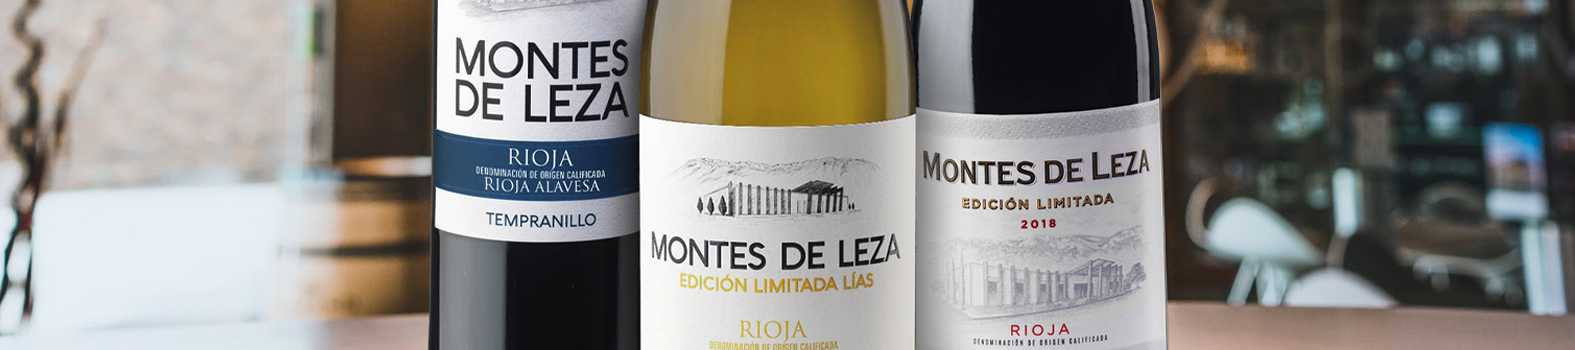 Enoturismo - Catas comentadas - Cata Montes de Leza de 3 vinos - Bodegas Lozano